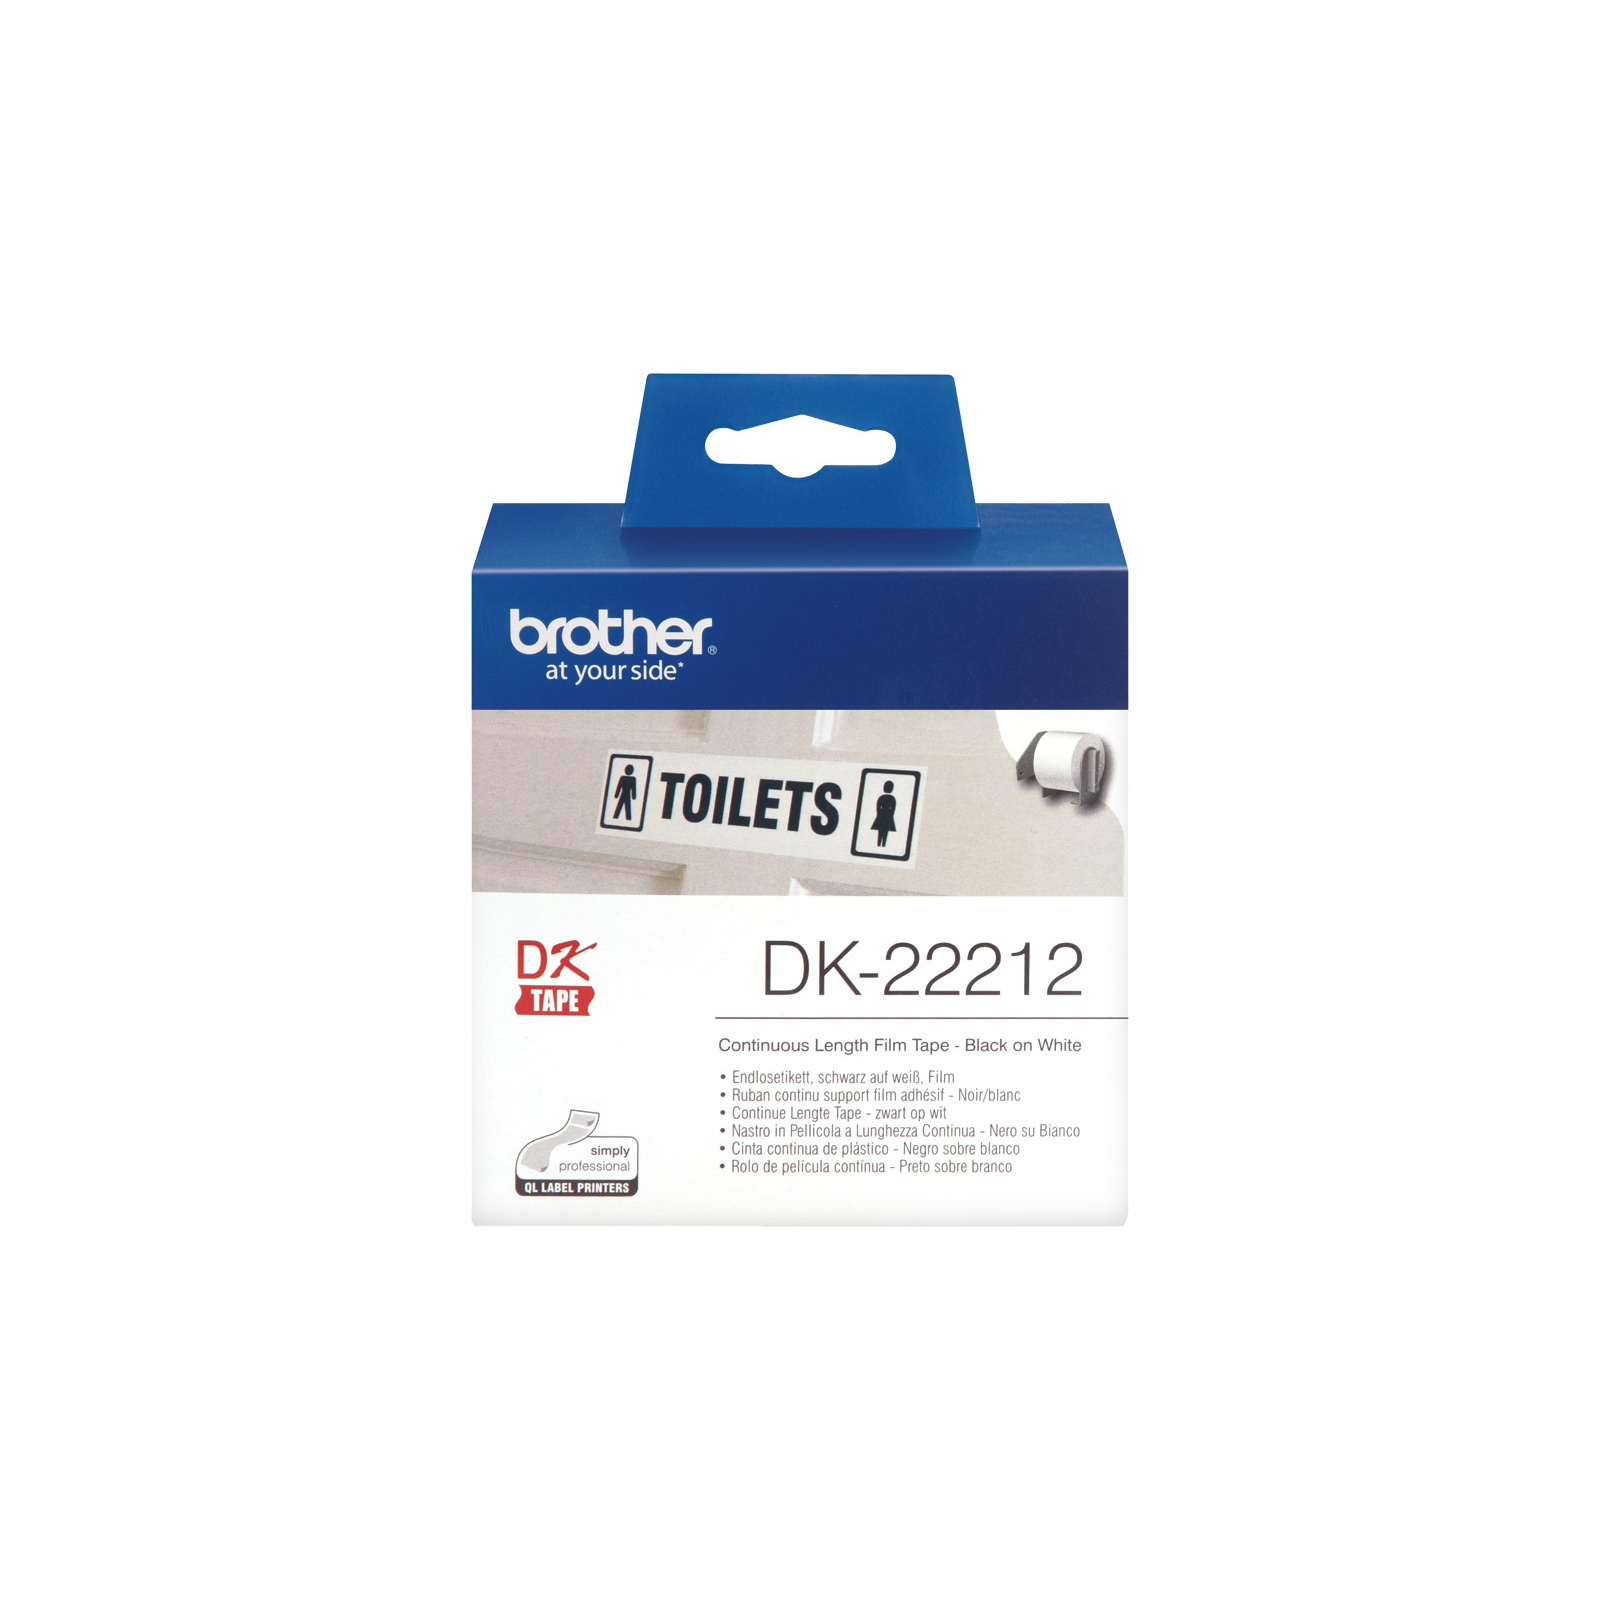 Етикет-стрічка Brother для принтера QL-1060N/QL-570QL-800 ламін.(62mm x 15.24M) (DK22212)